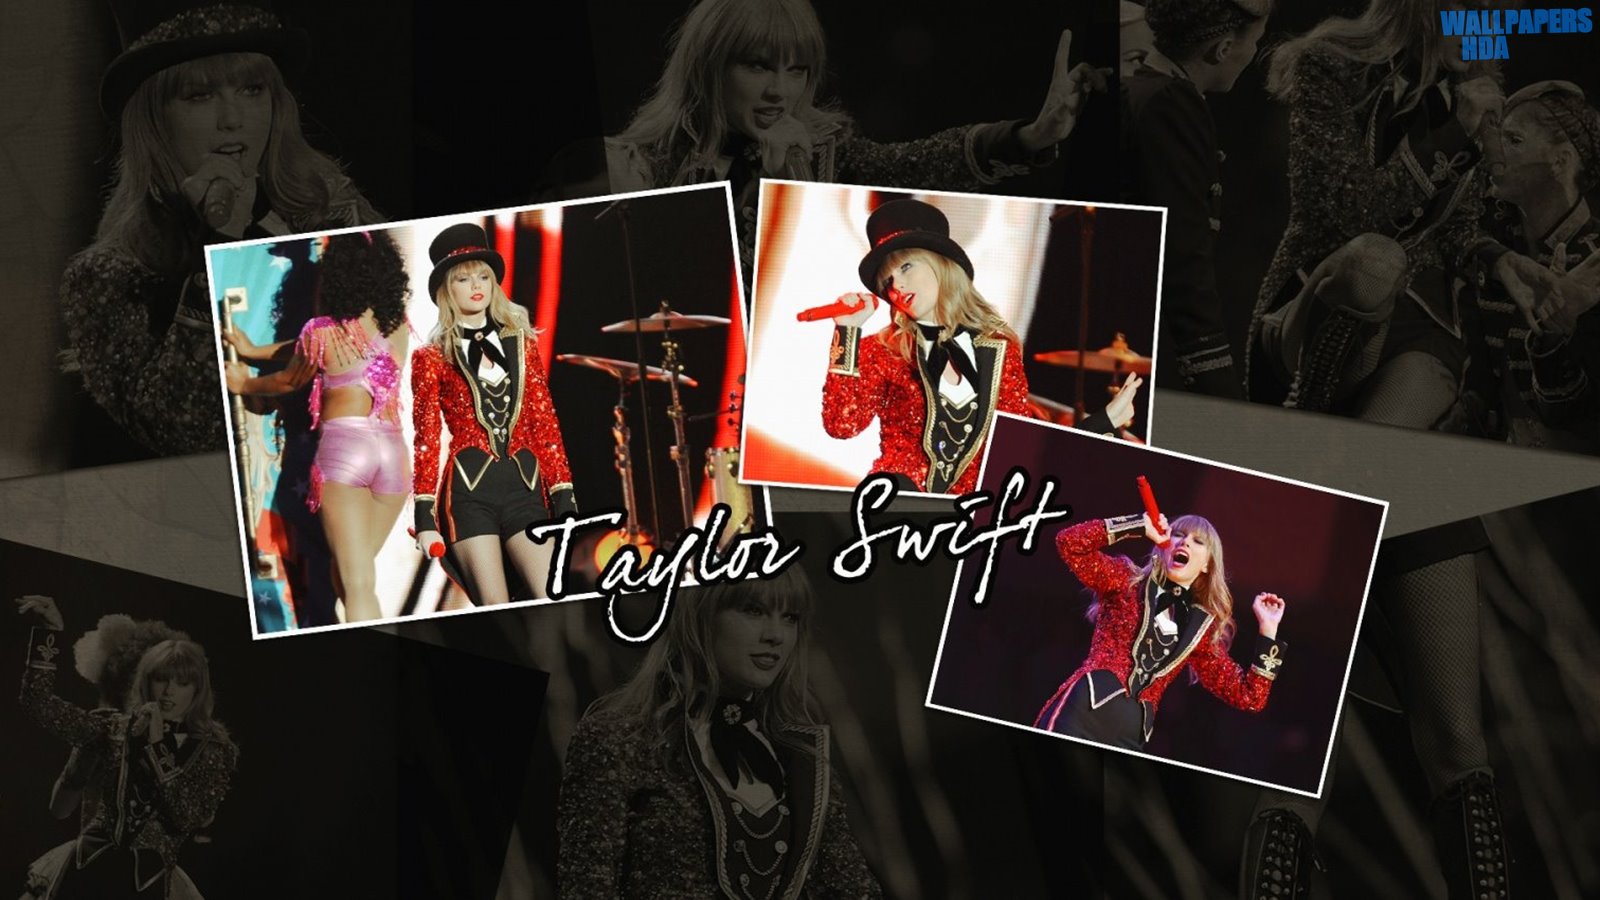 Taylor swift mtv europe music awards 2012 wallpaper 1600x900